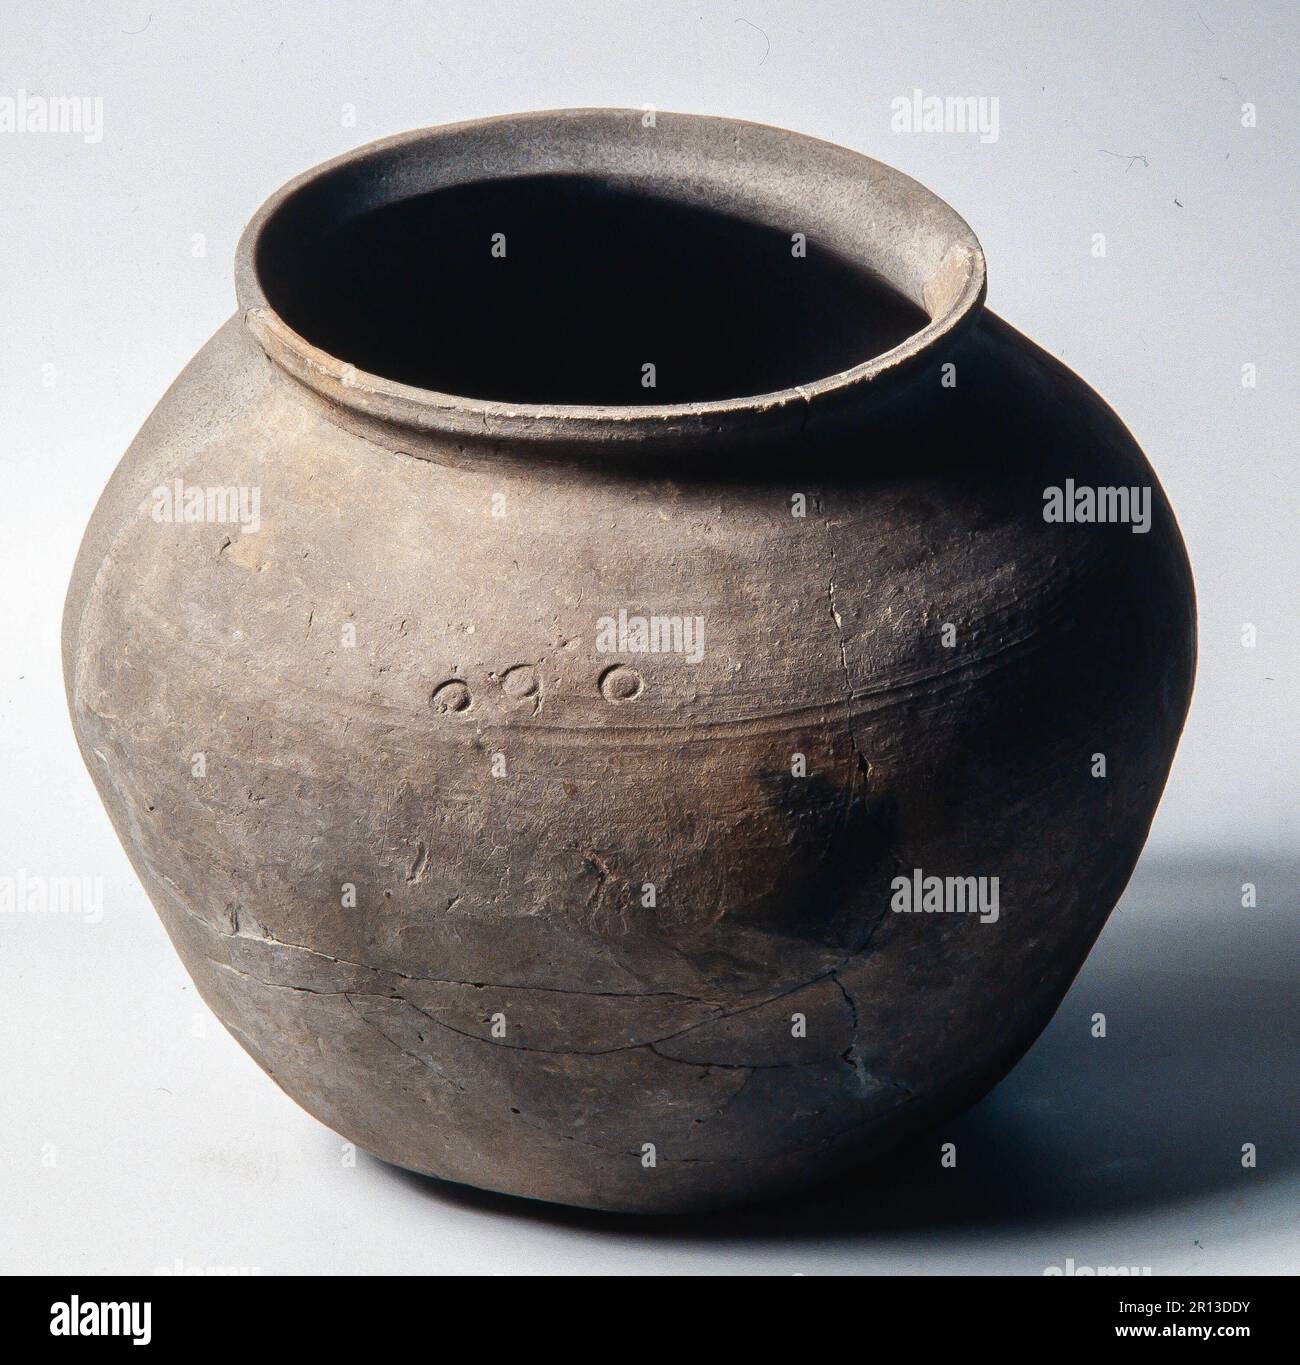 Olla de cerámica gris, procedente de Sant Vicenc de Rus, Castellar de n'Hug. Siglos XII-XIII. Museu d'Història de Catalunya. Stock Photo